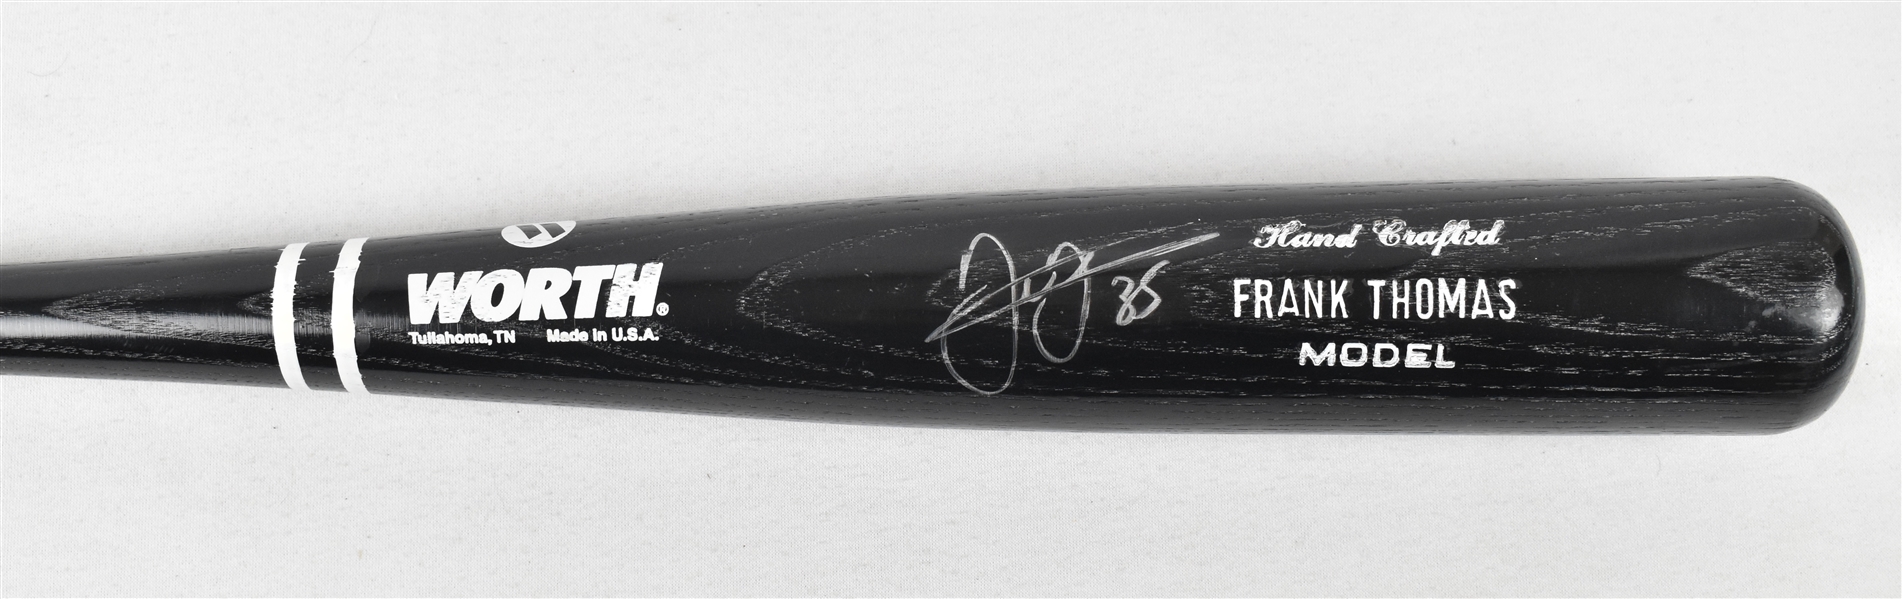 Frank Thomas Autographed Bat